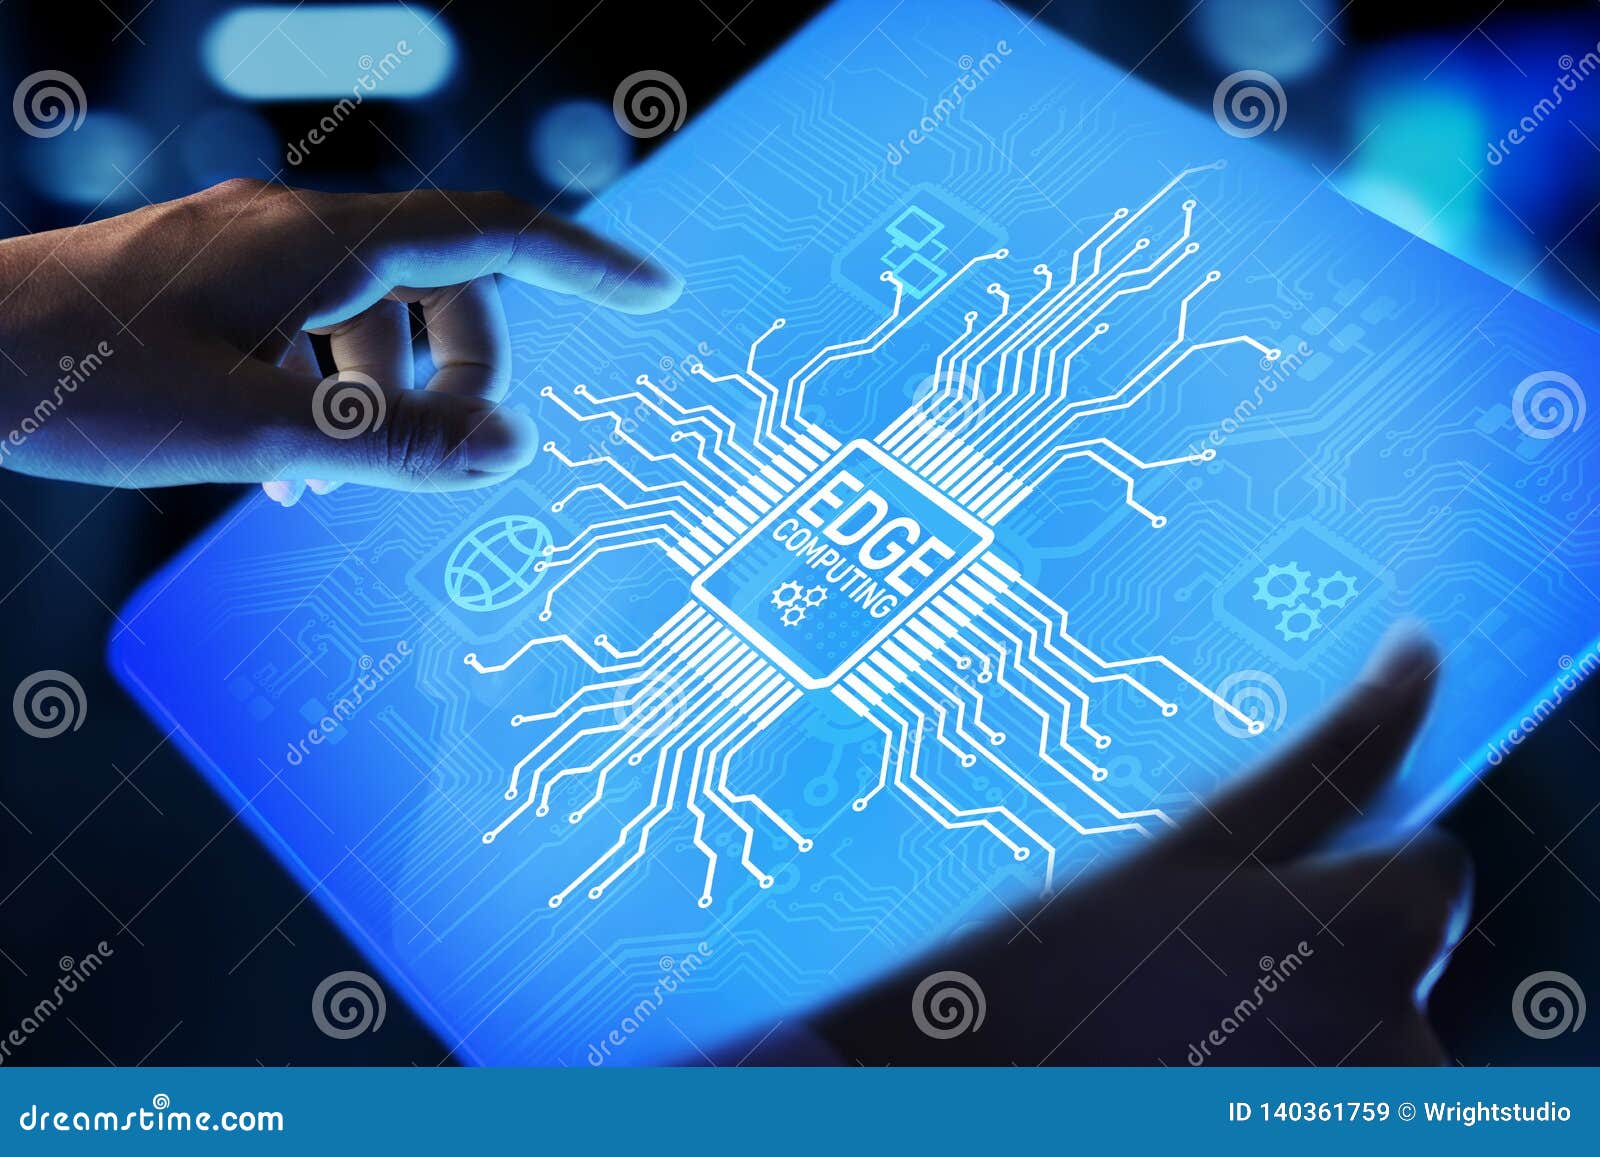 edge computing modern it technology on virtual screen concept.